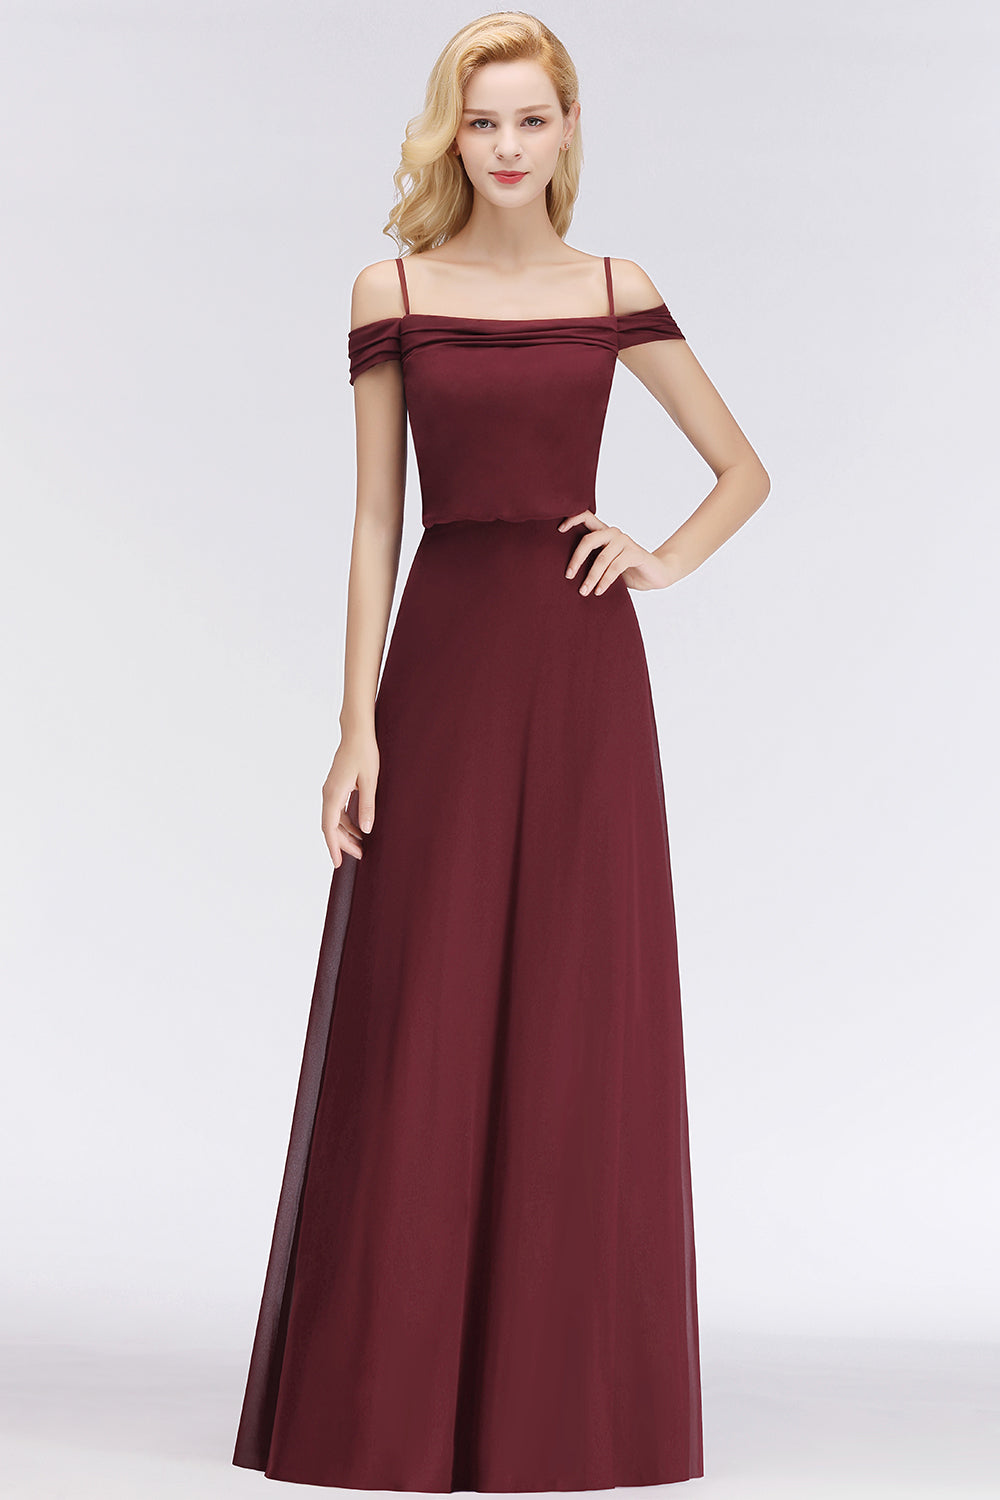 Elegant Off-the-Shoulder Burgundy Bridesmaid Dress Online Spaghetti-Straps Affordable Maid of Honor Dress-27dress